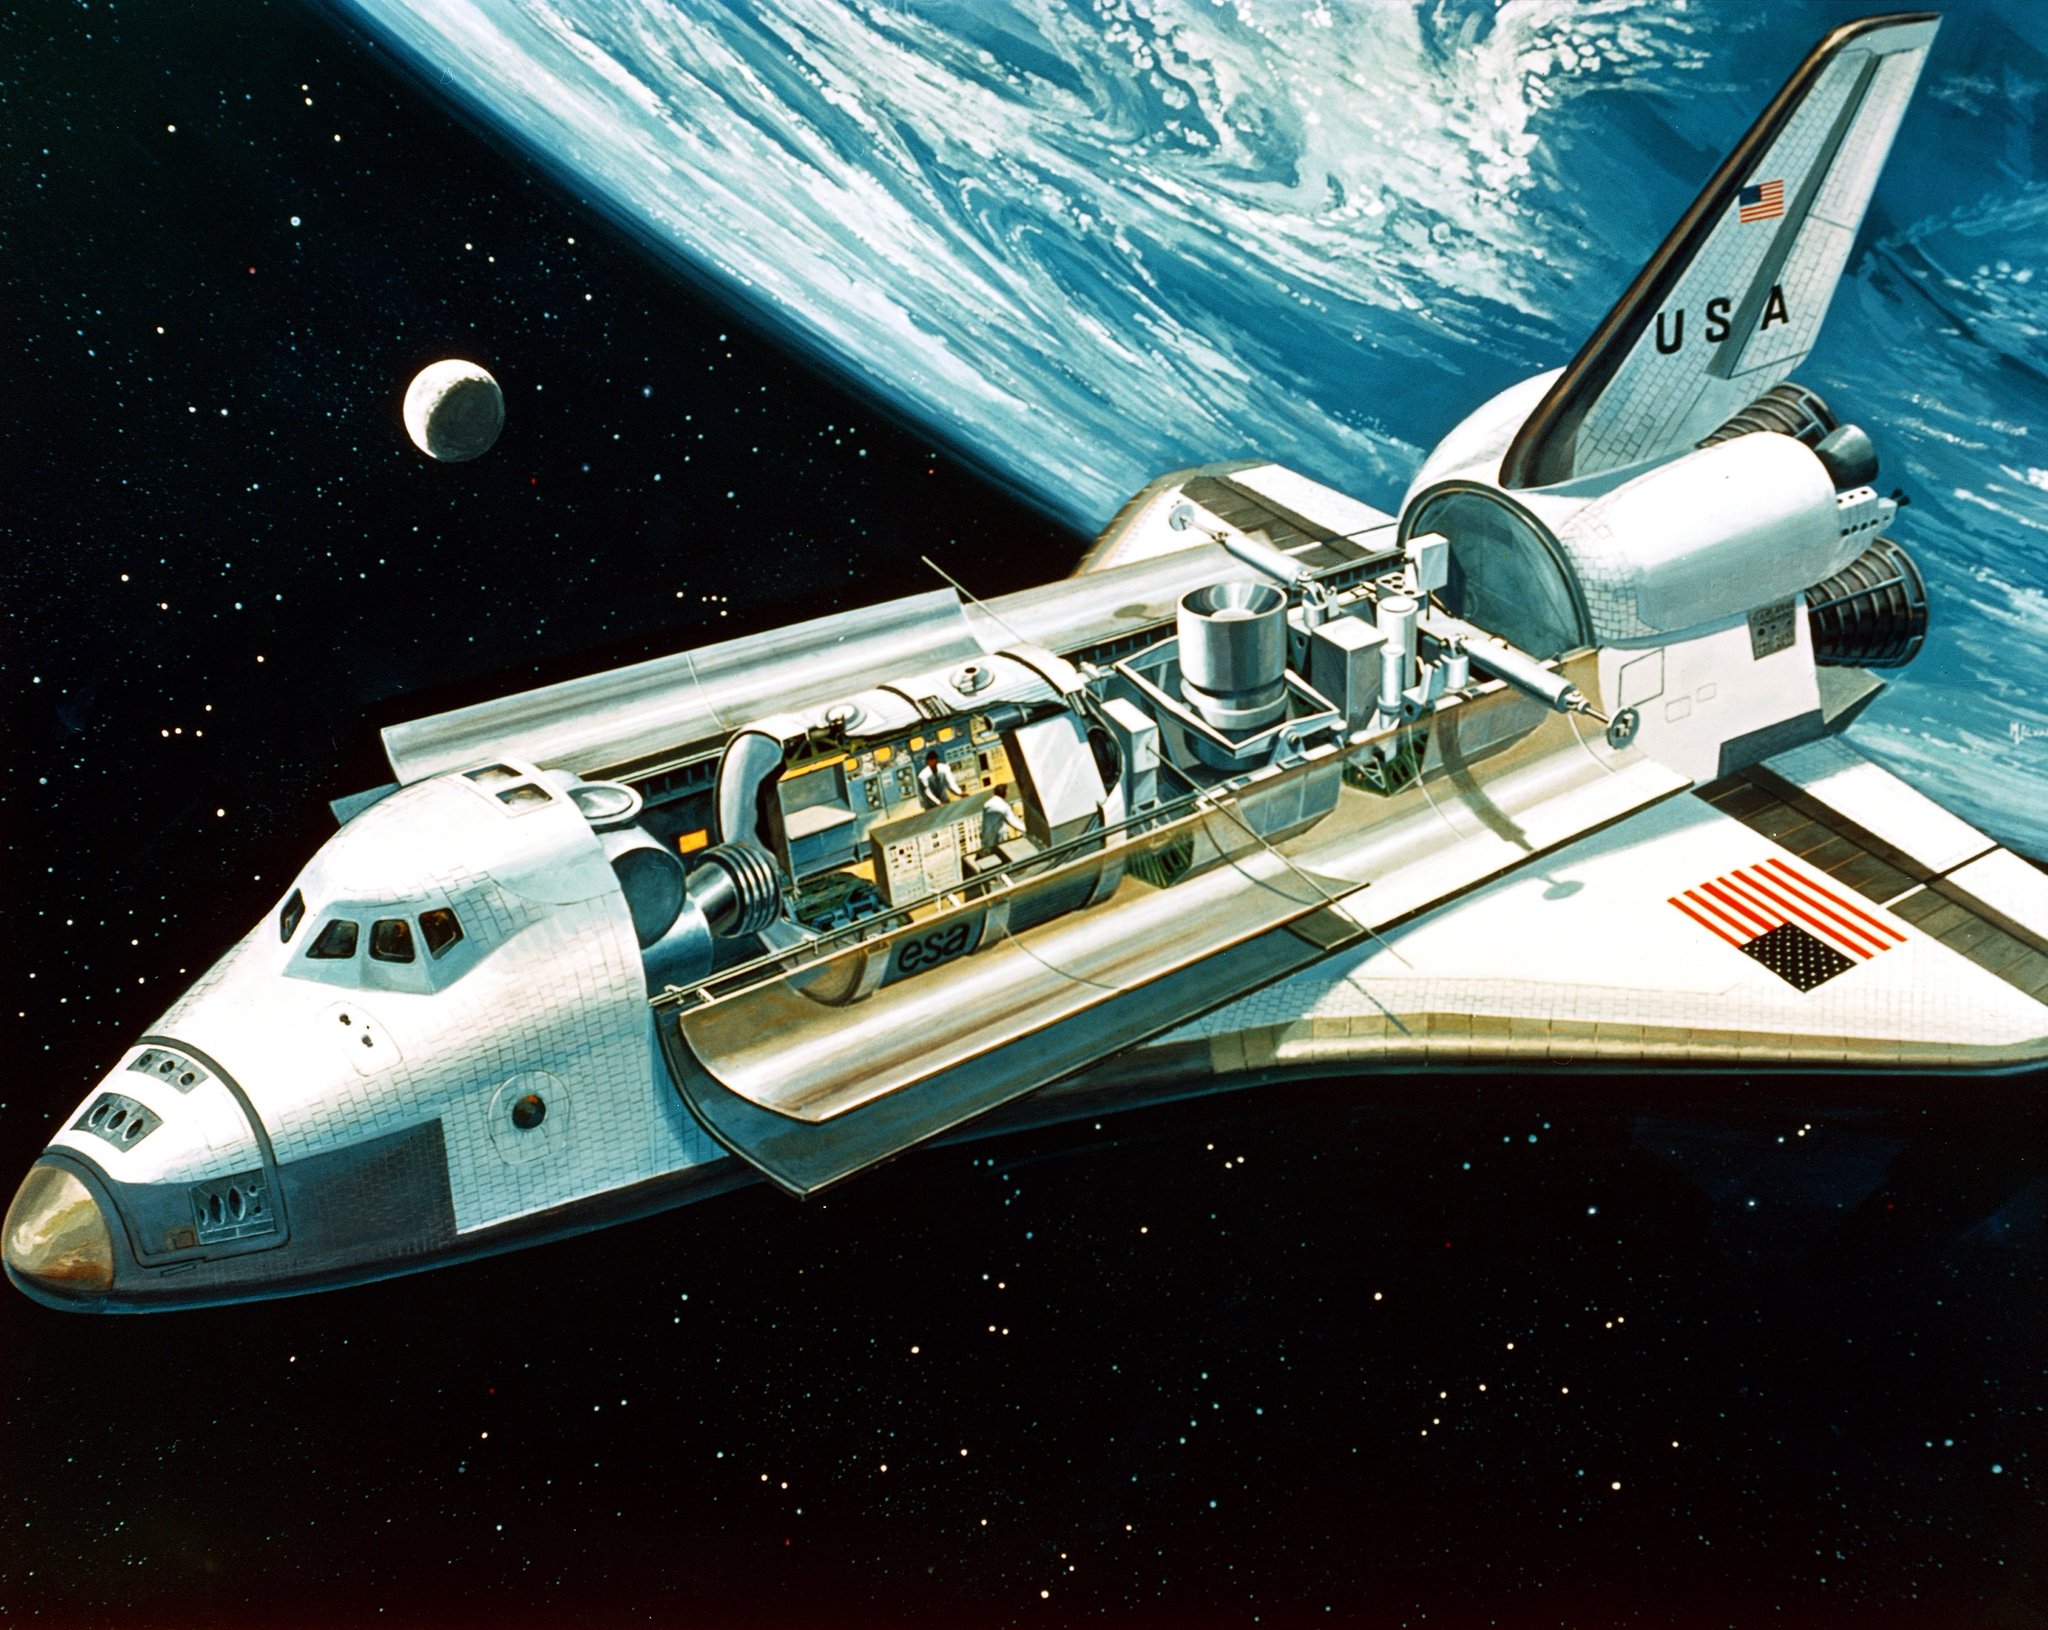 تويتر \ Humanoid History على تويتر: "1976 NASA concept art with an inside view of a future space shuttle. https://t.co/UUcsylTKK0"